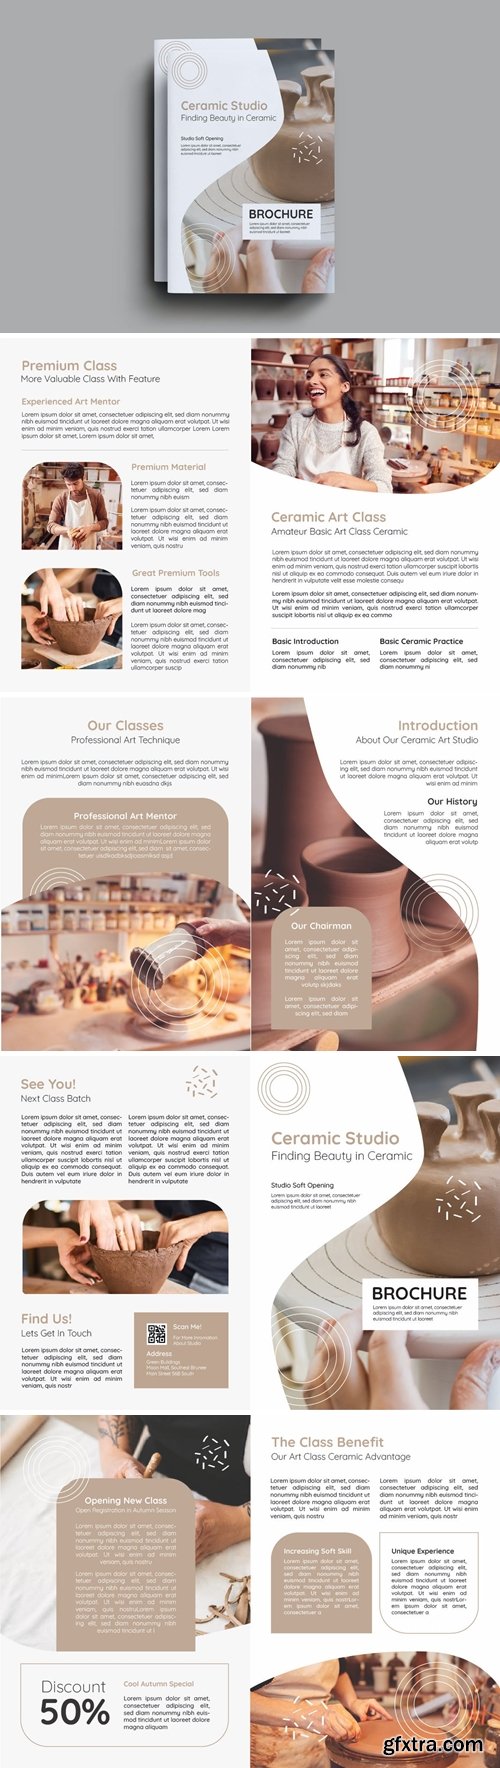 Ceramic Studio Brochure